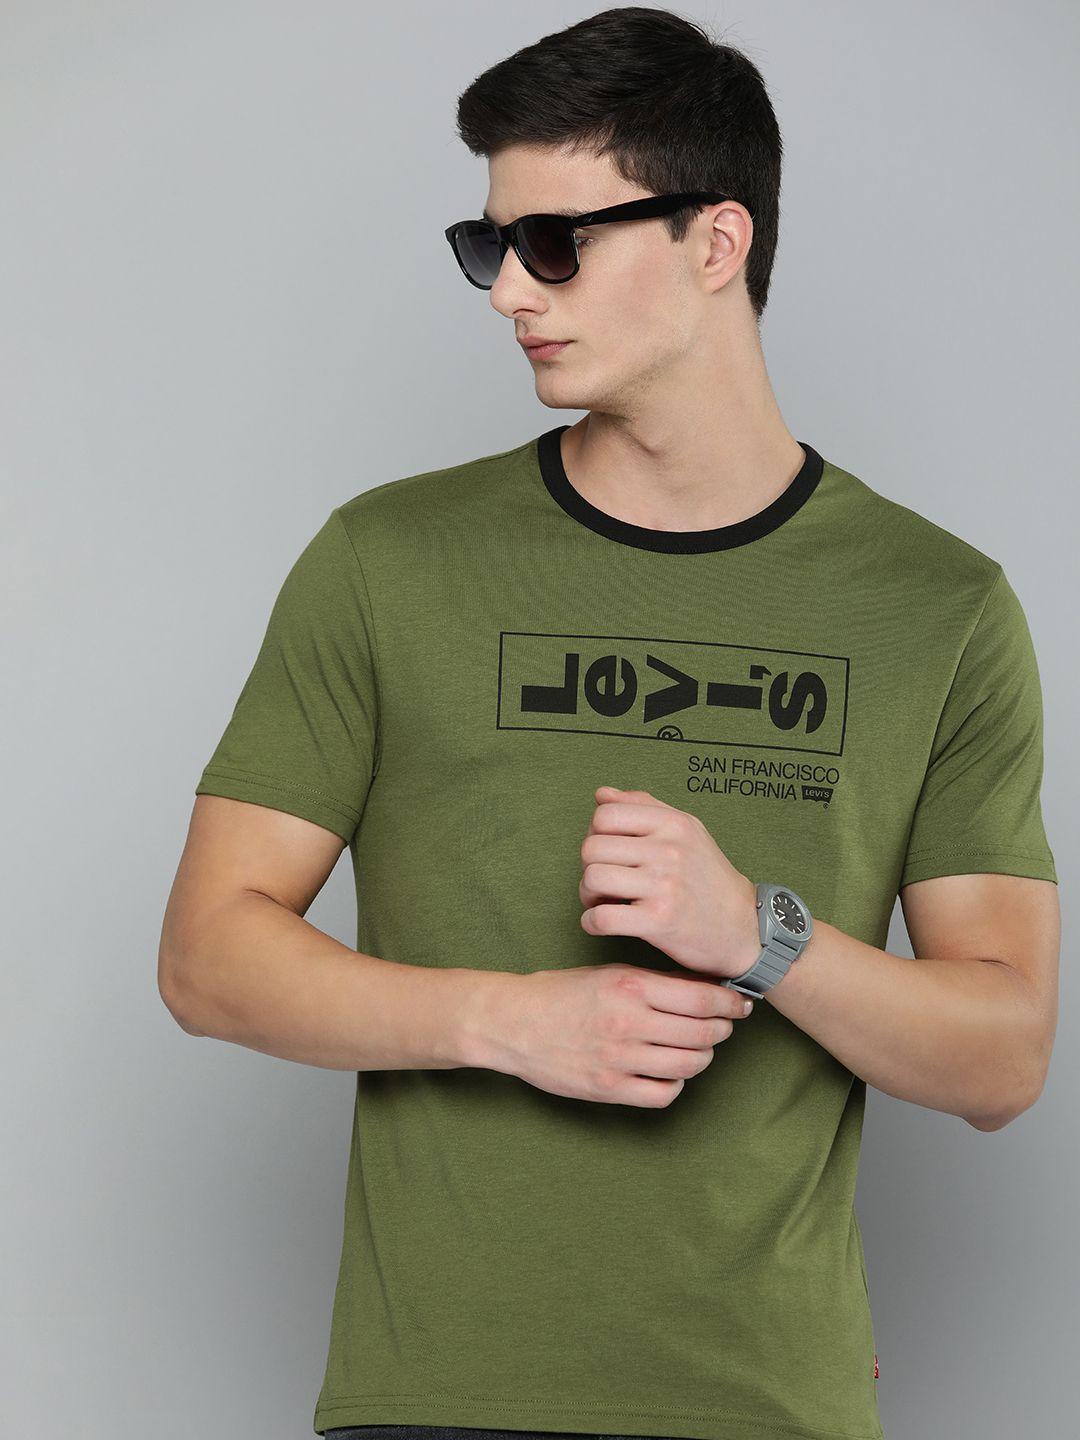 levis graphic brand logo printed pure cotton t-shirt